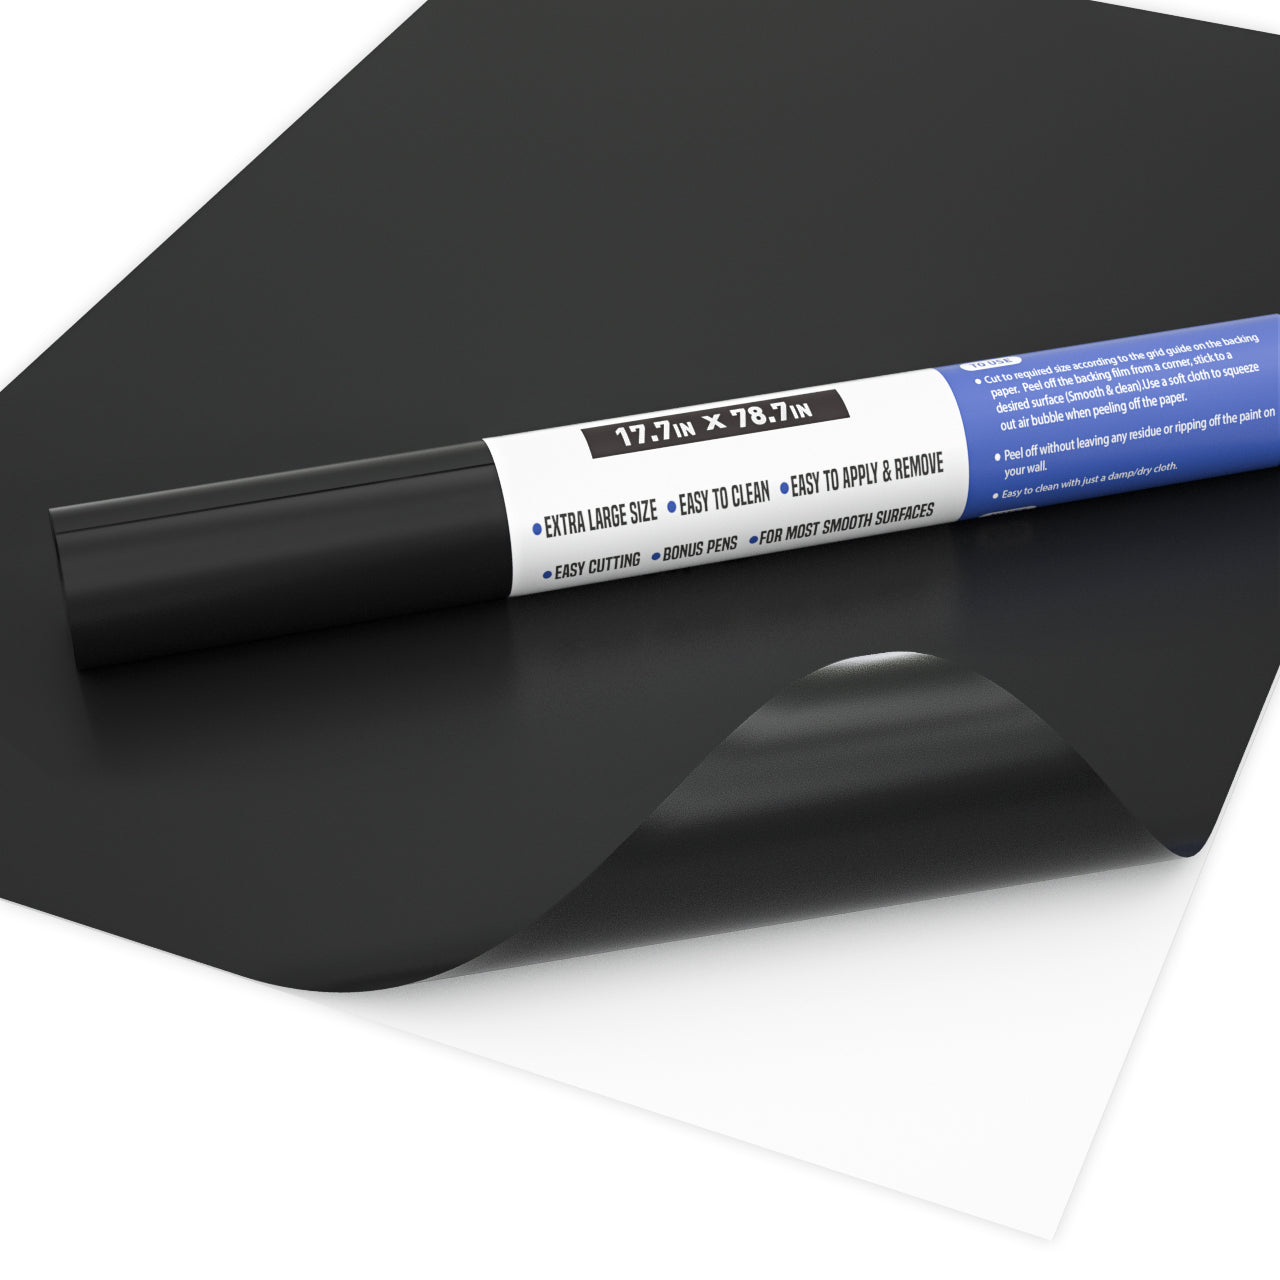 Portable Marker Pen Refillable Paint Pen Thermal Paper Eraser